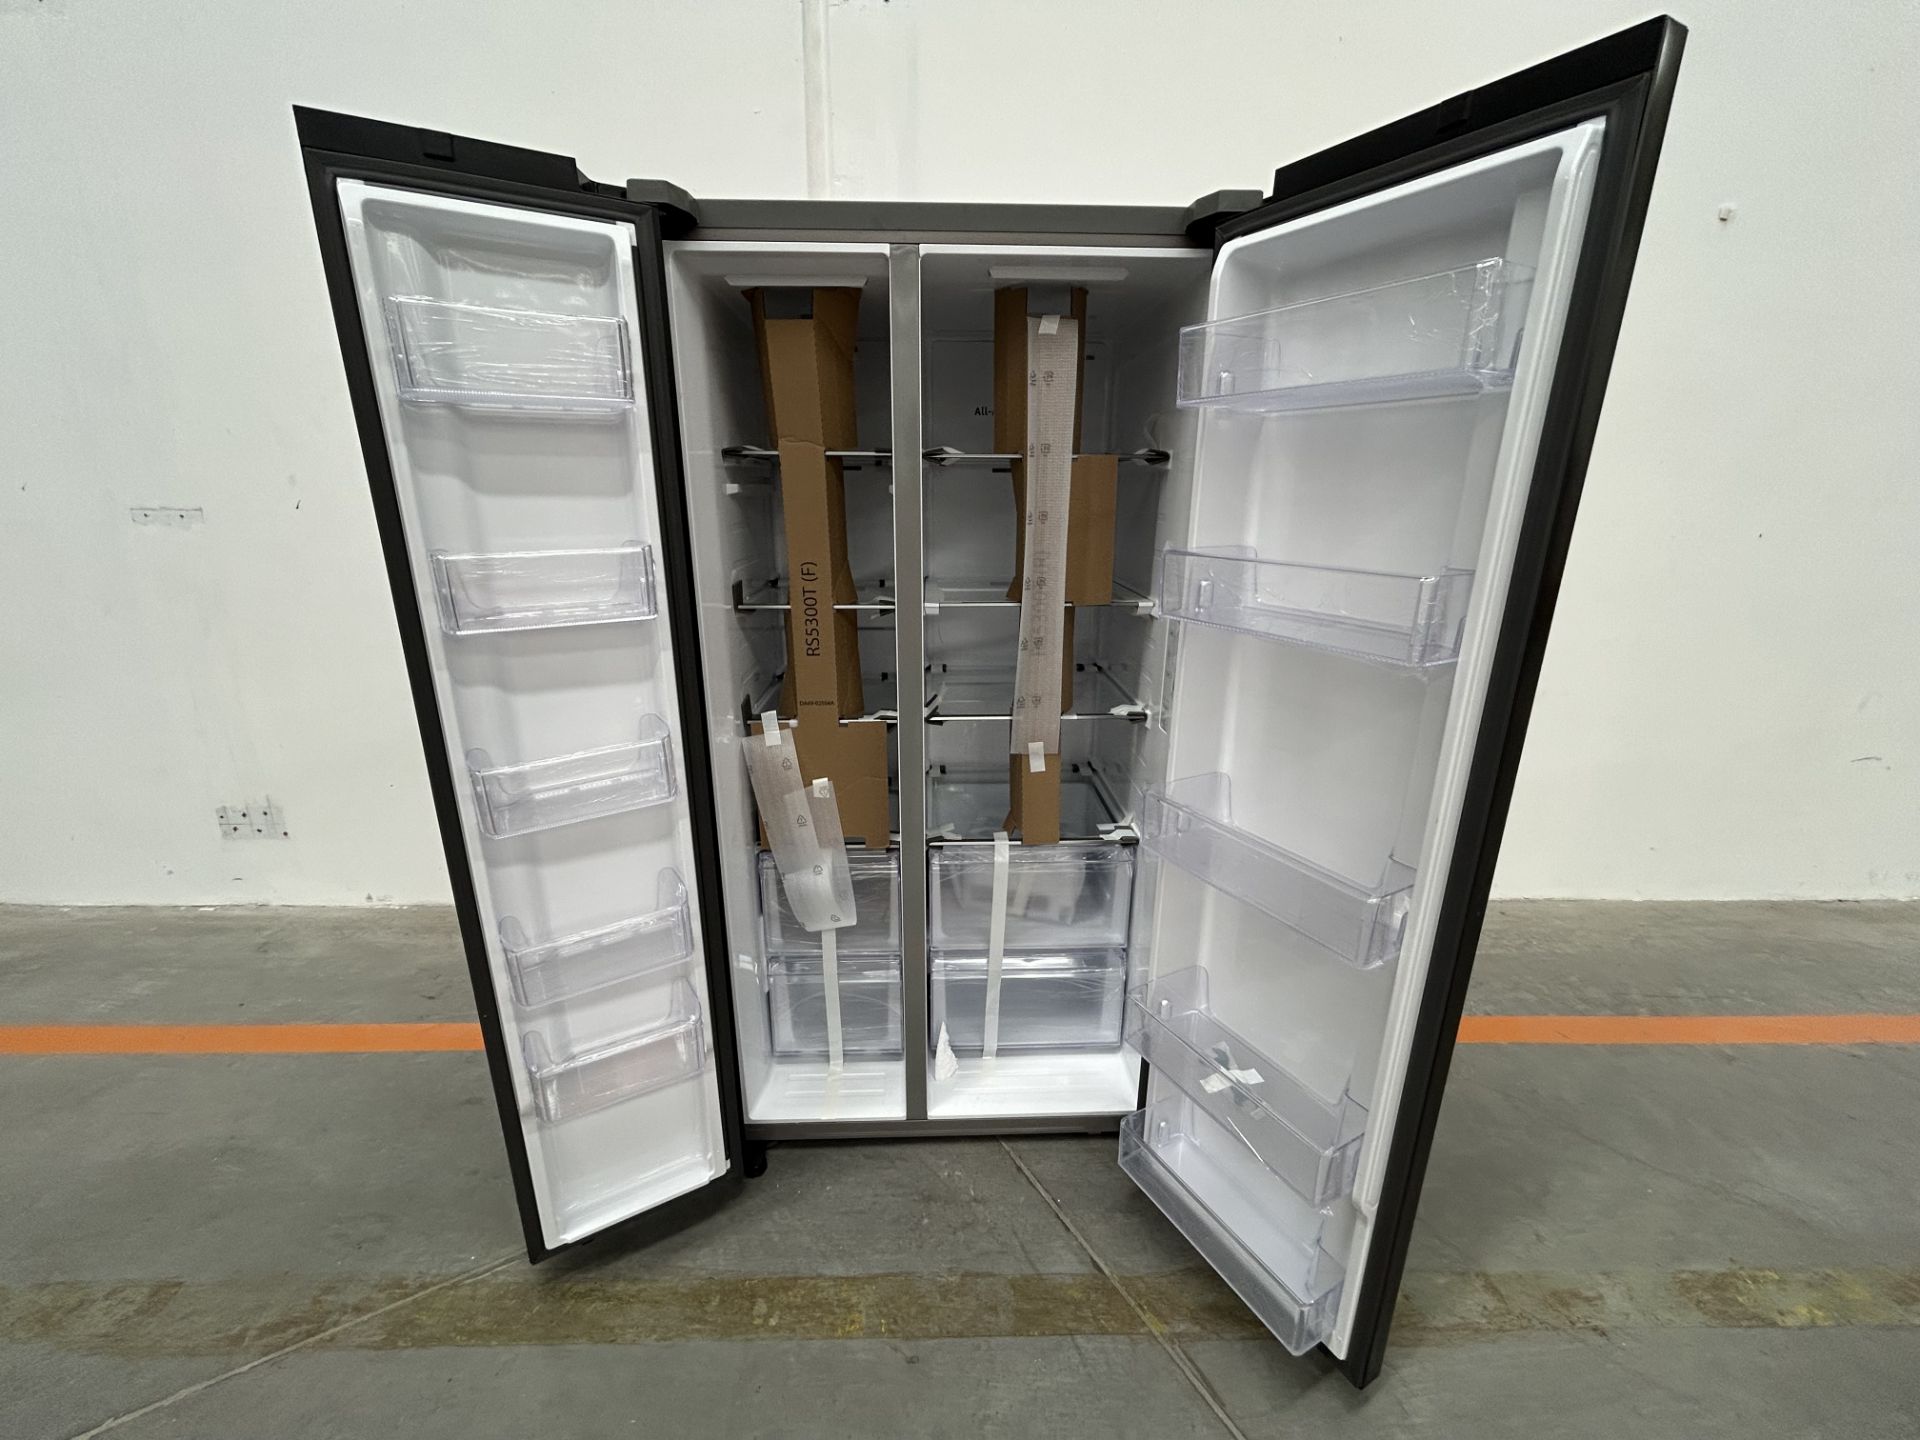 (NUEVO) Refrigerador Marca SAMSUNG, Modelo RS28CB70NAQL, Serie 1168L, Color GRIS - Image 4 of 4